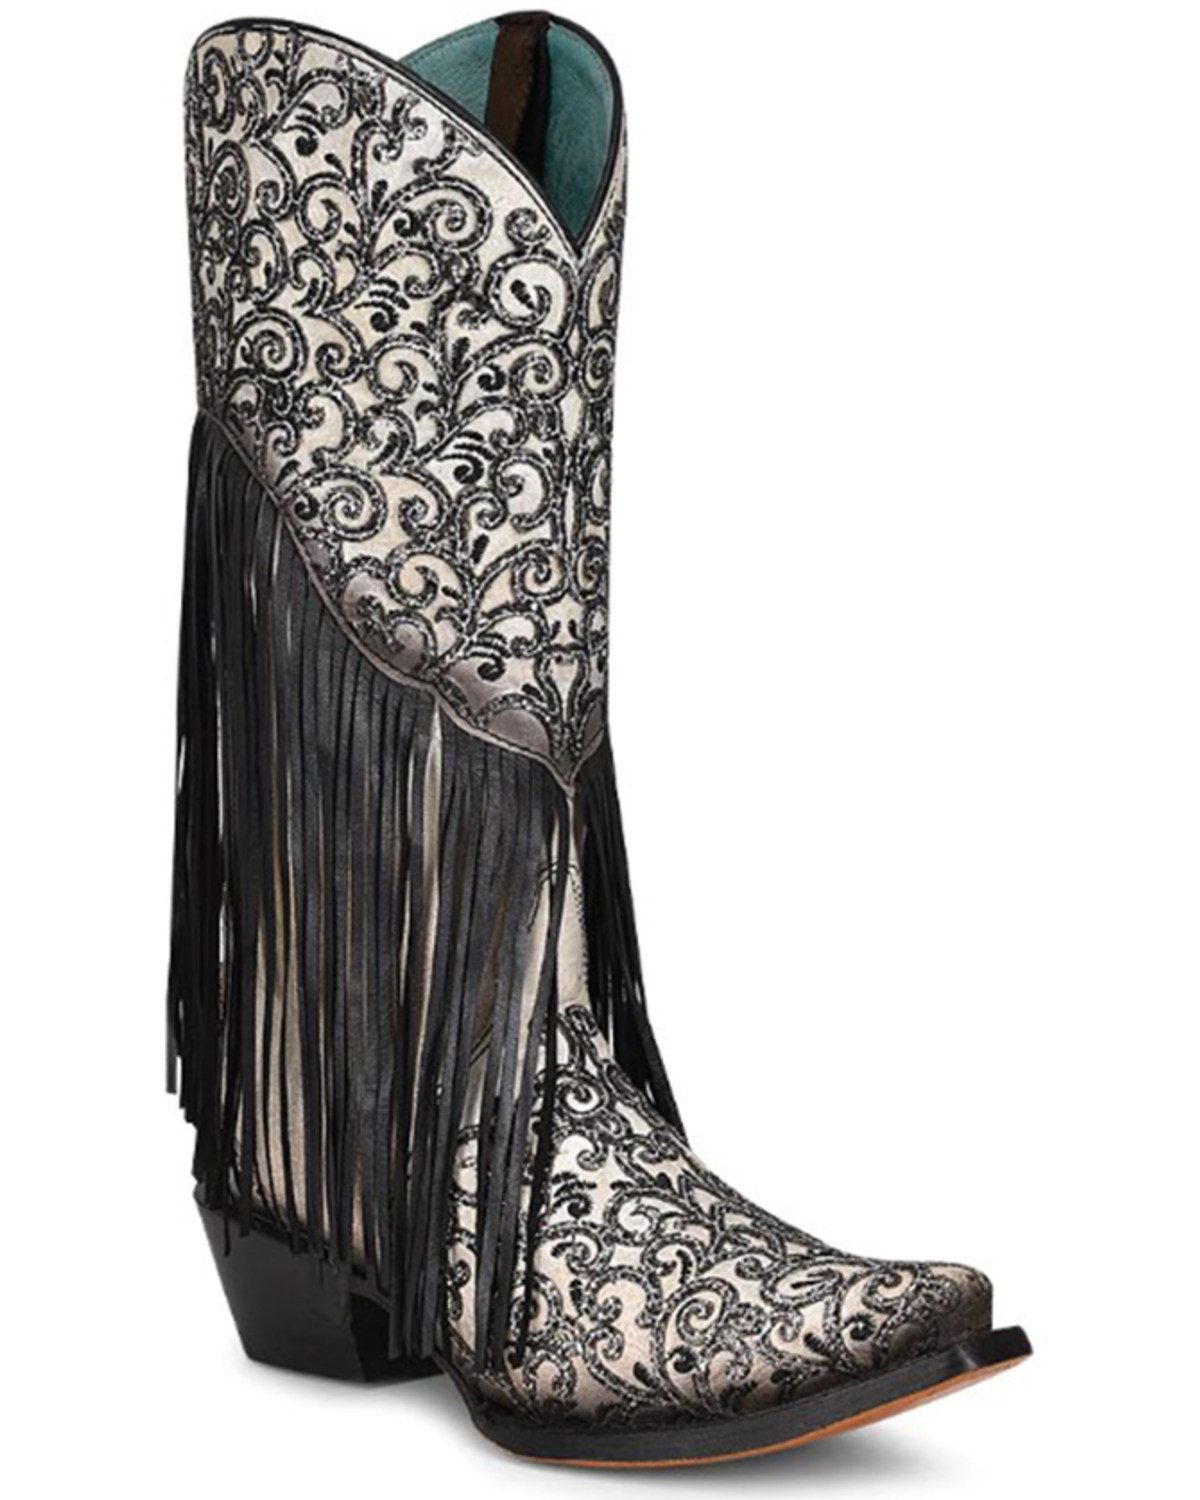 Corral Women's Glitter Fringe Western Boots - Snip Toe